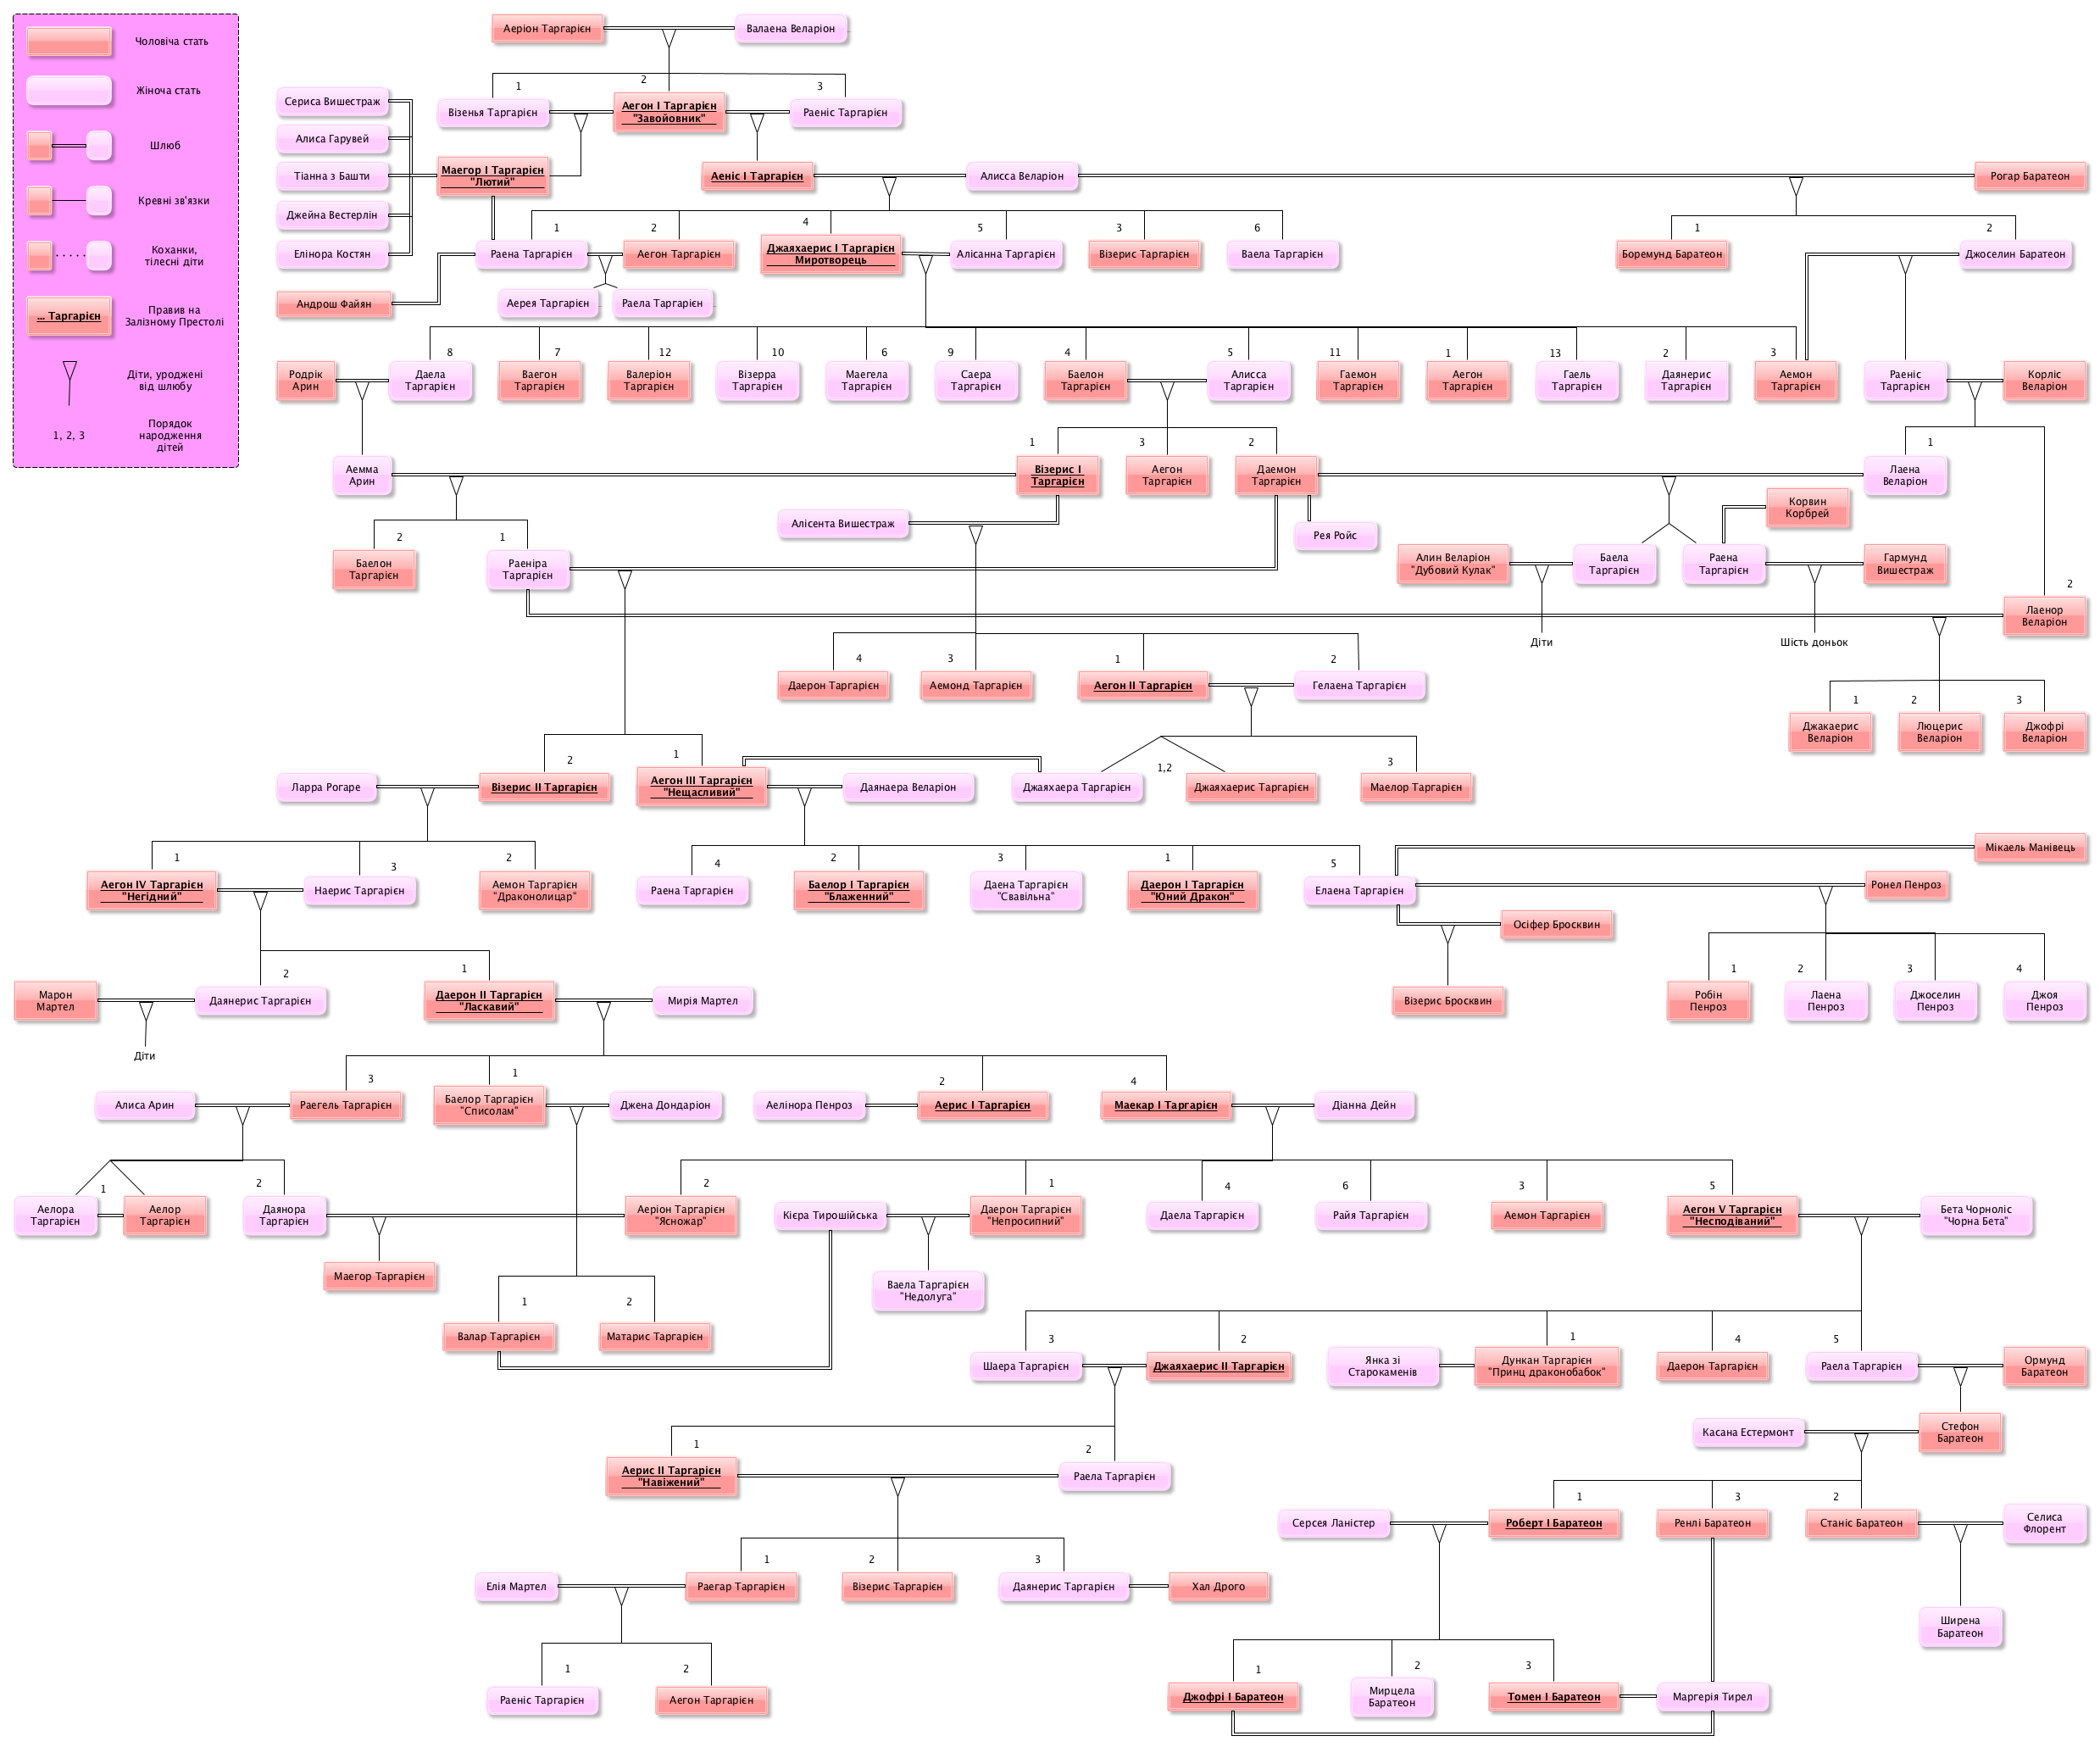 Targaryen family tree